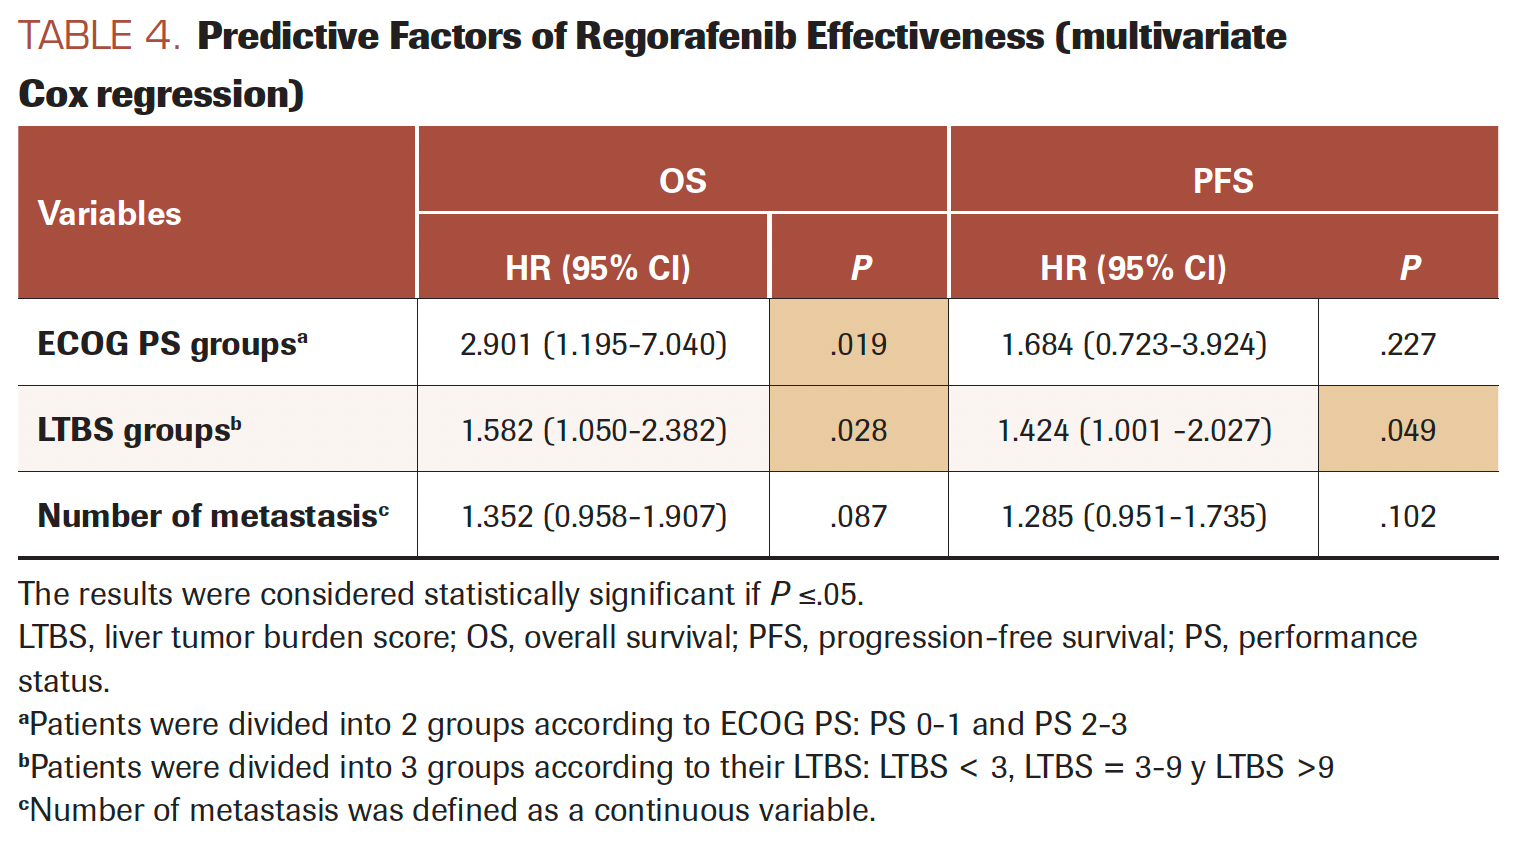 TABLE 4. Predictive Factors of Regorafenib Effectiveness (multivariate Cox regression)